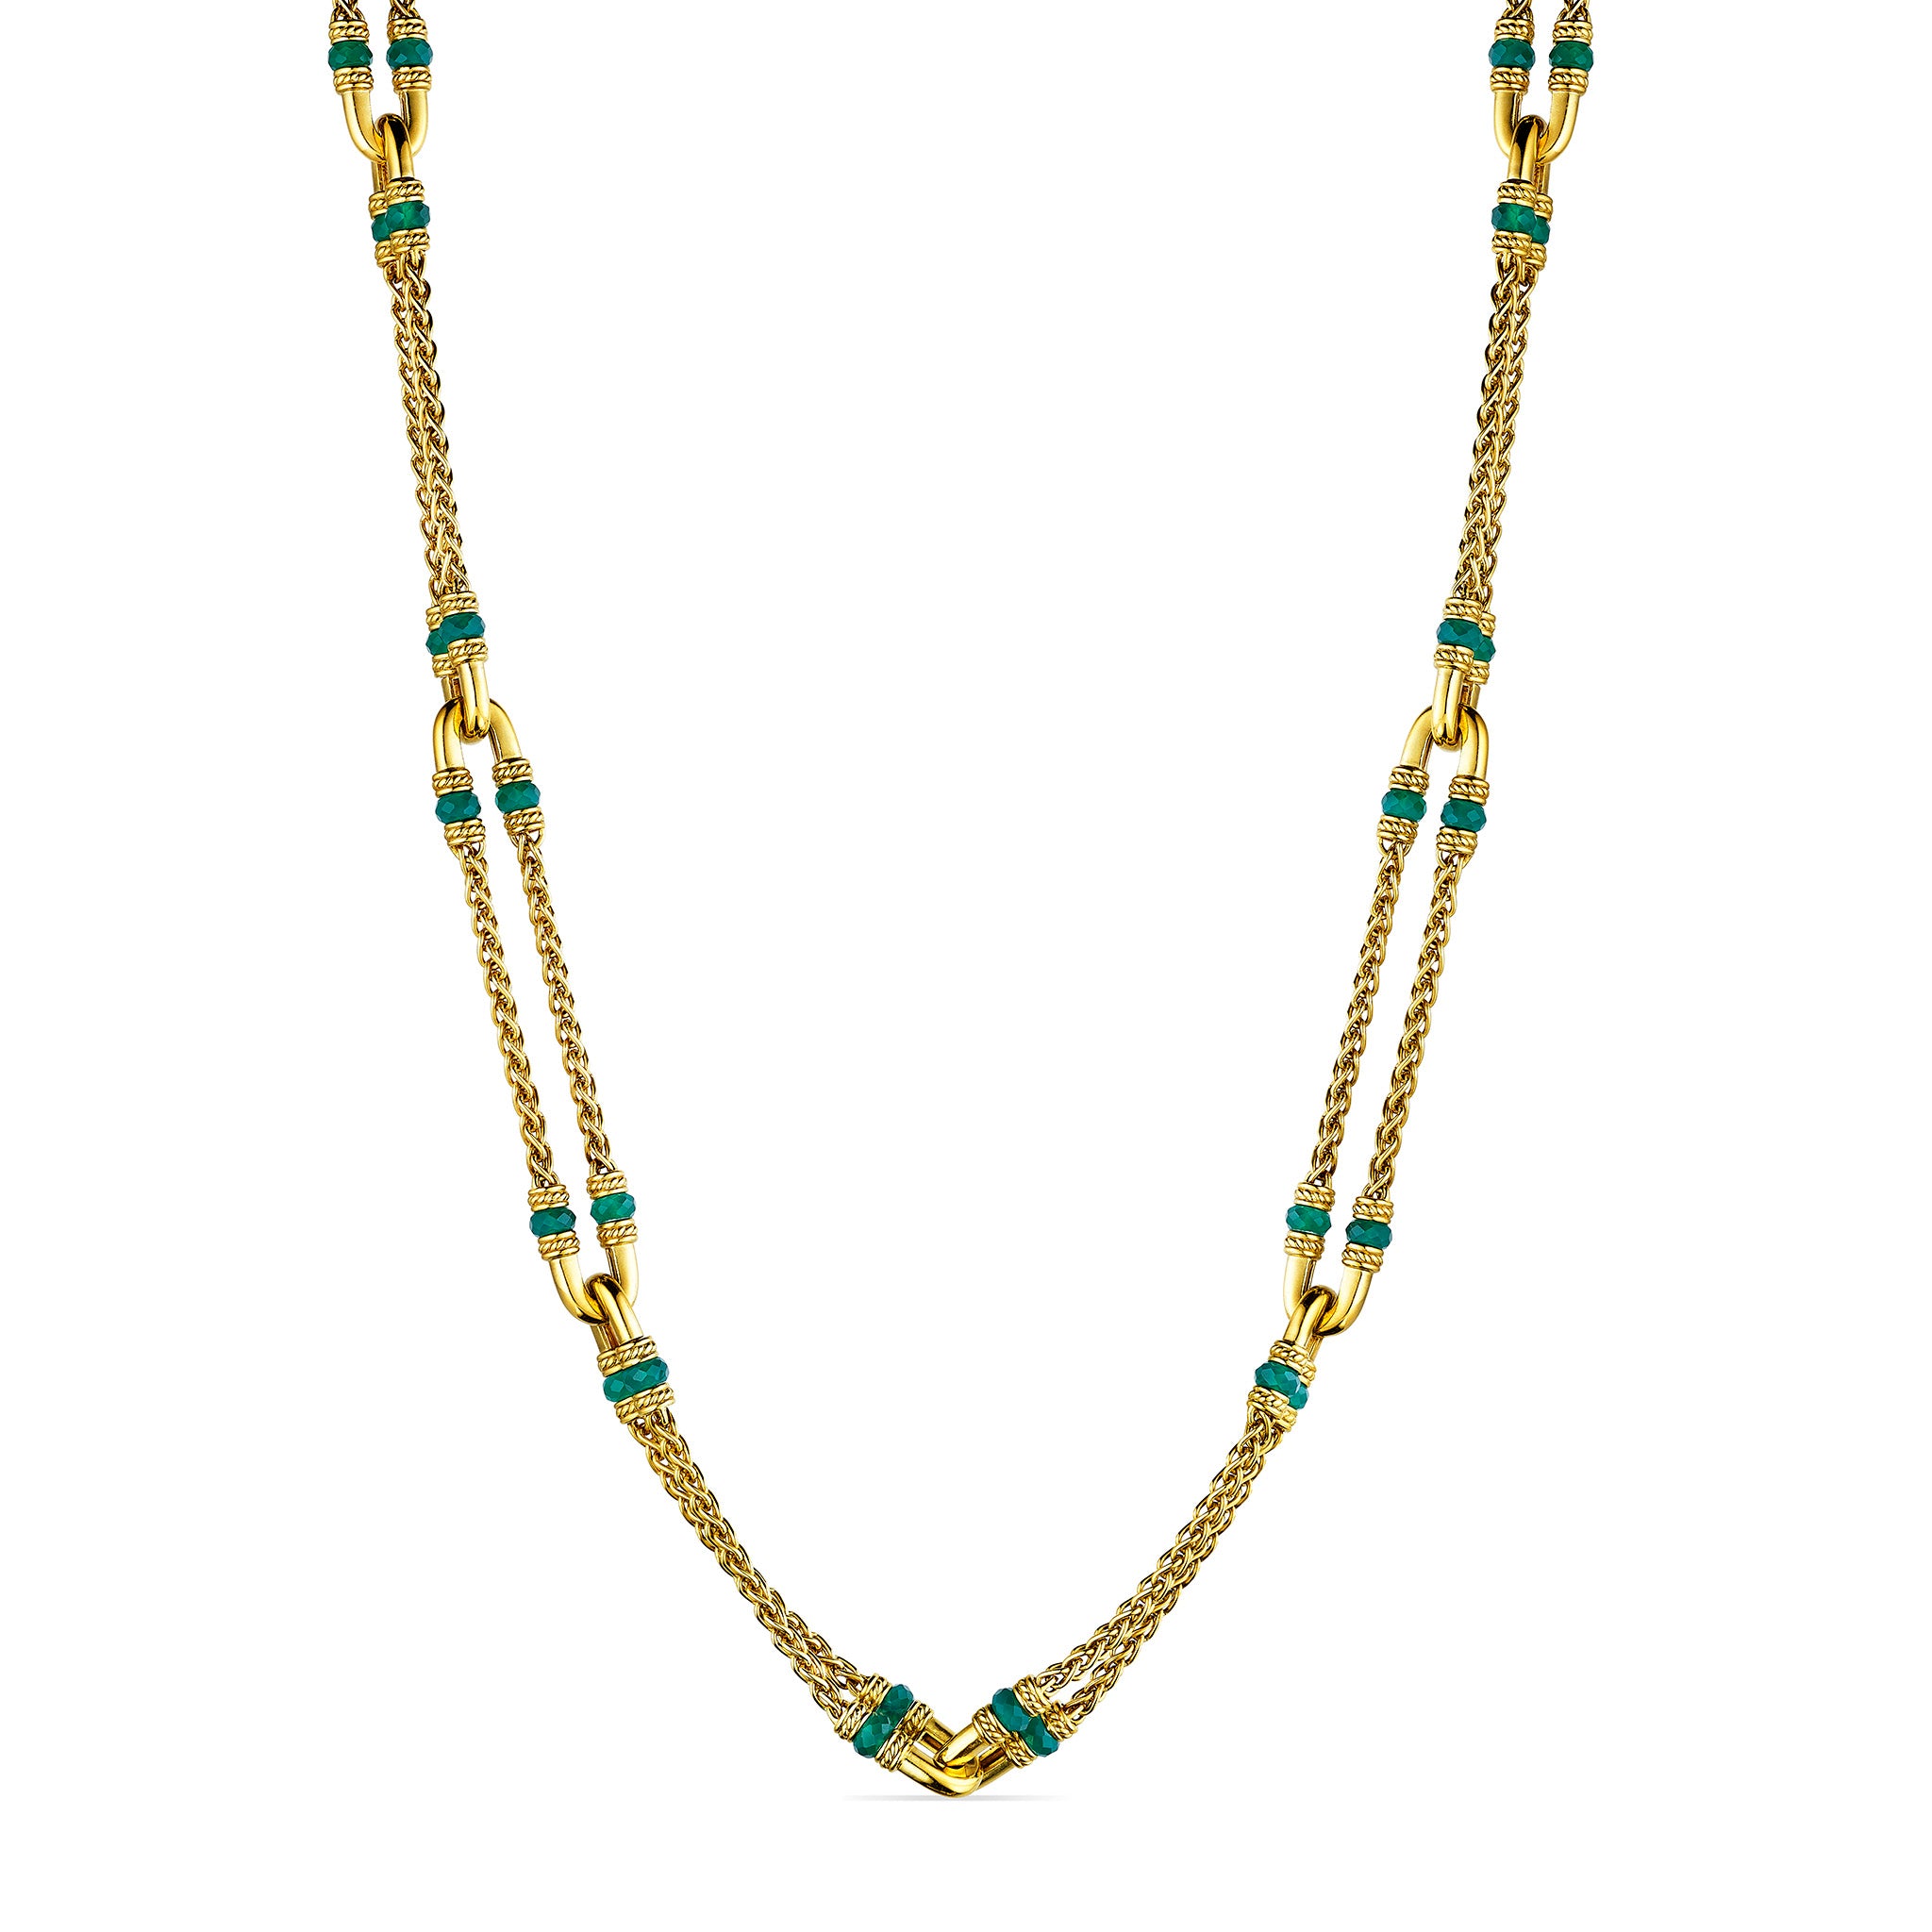 Judith Ripka | Ocean Reef Statement Necklace with Green Chalcedony in 18K Gold Vermeil